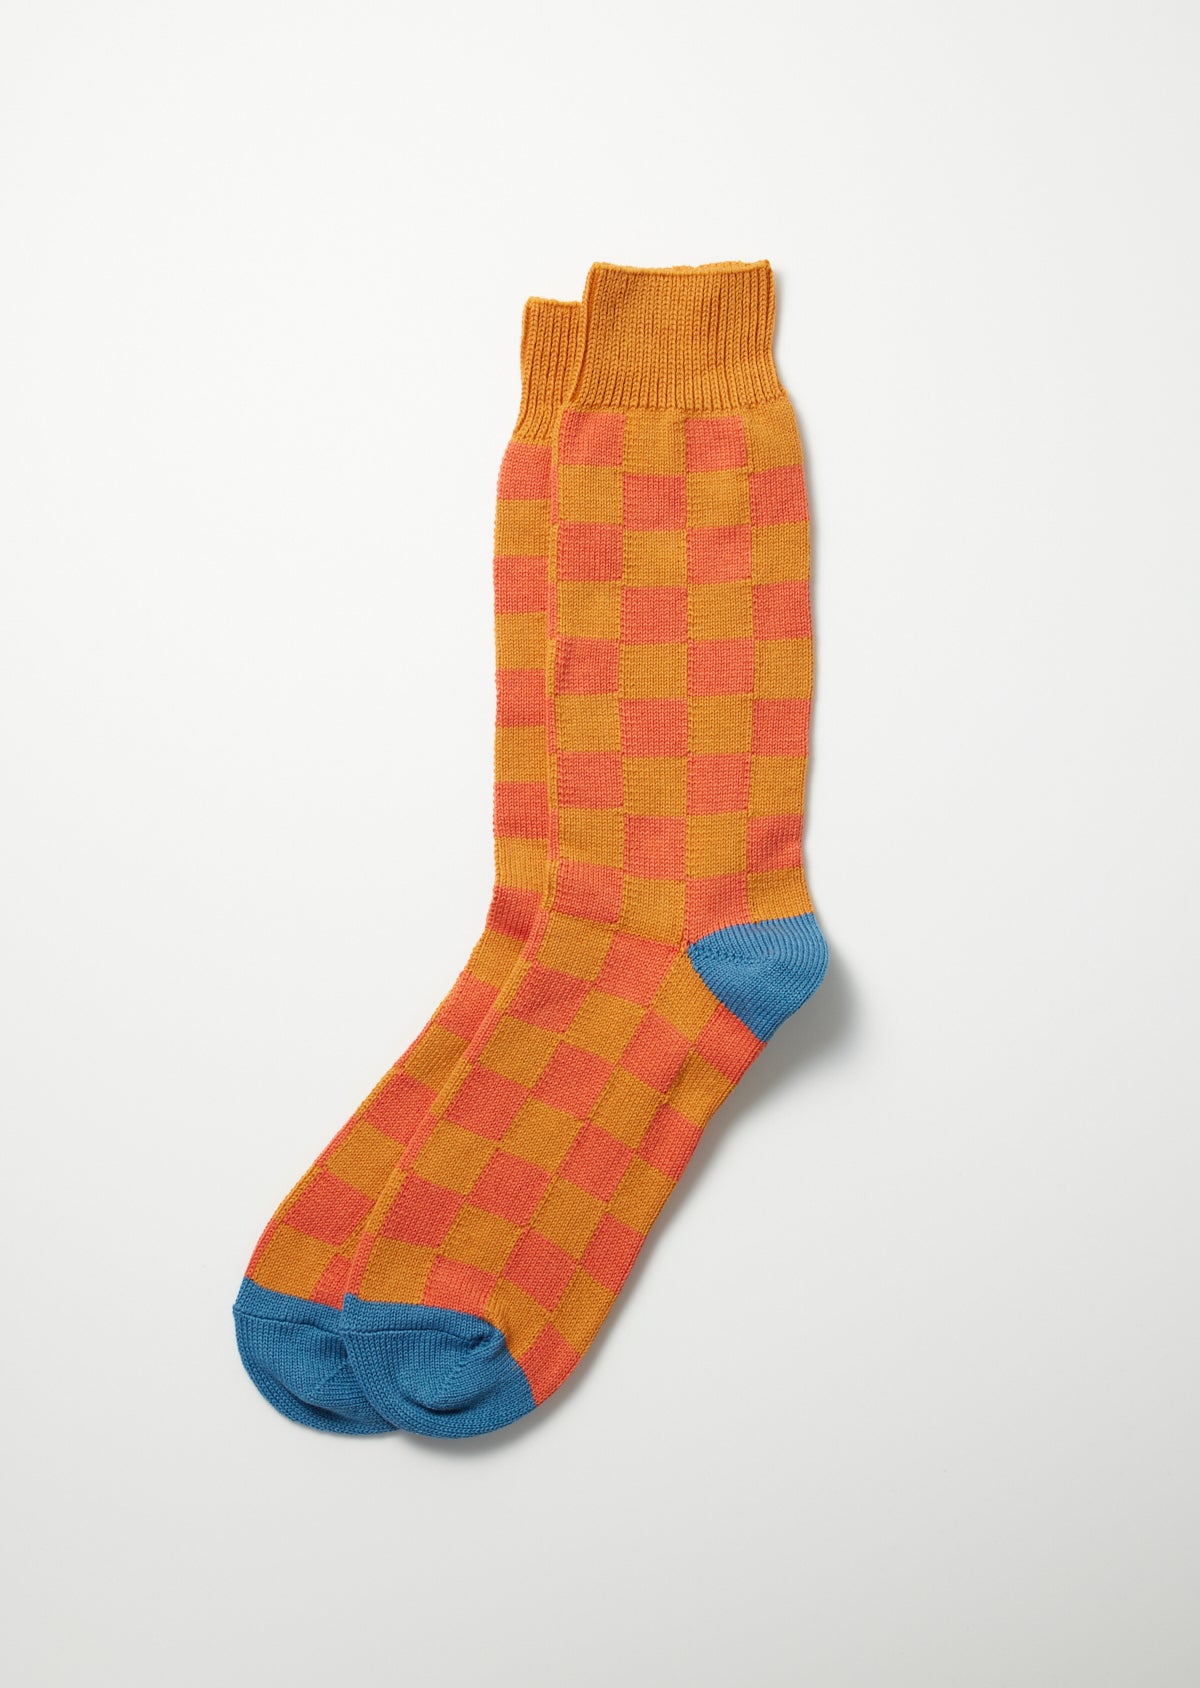 Rototo Checkerboard Crew Socks in light orange dark orange check with light blue toe and heel